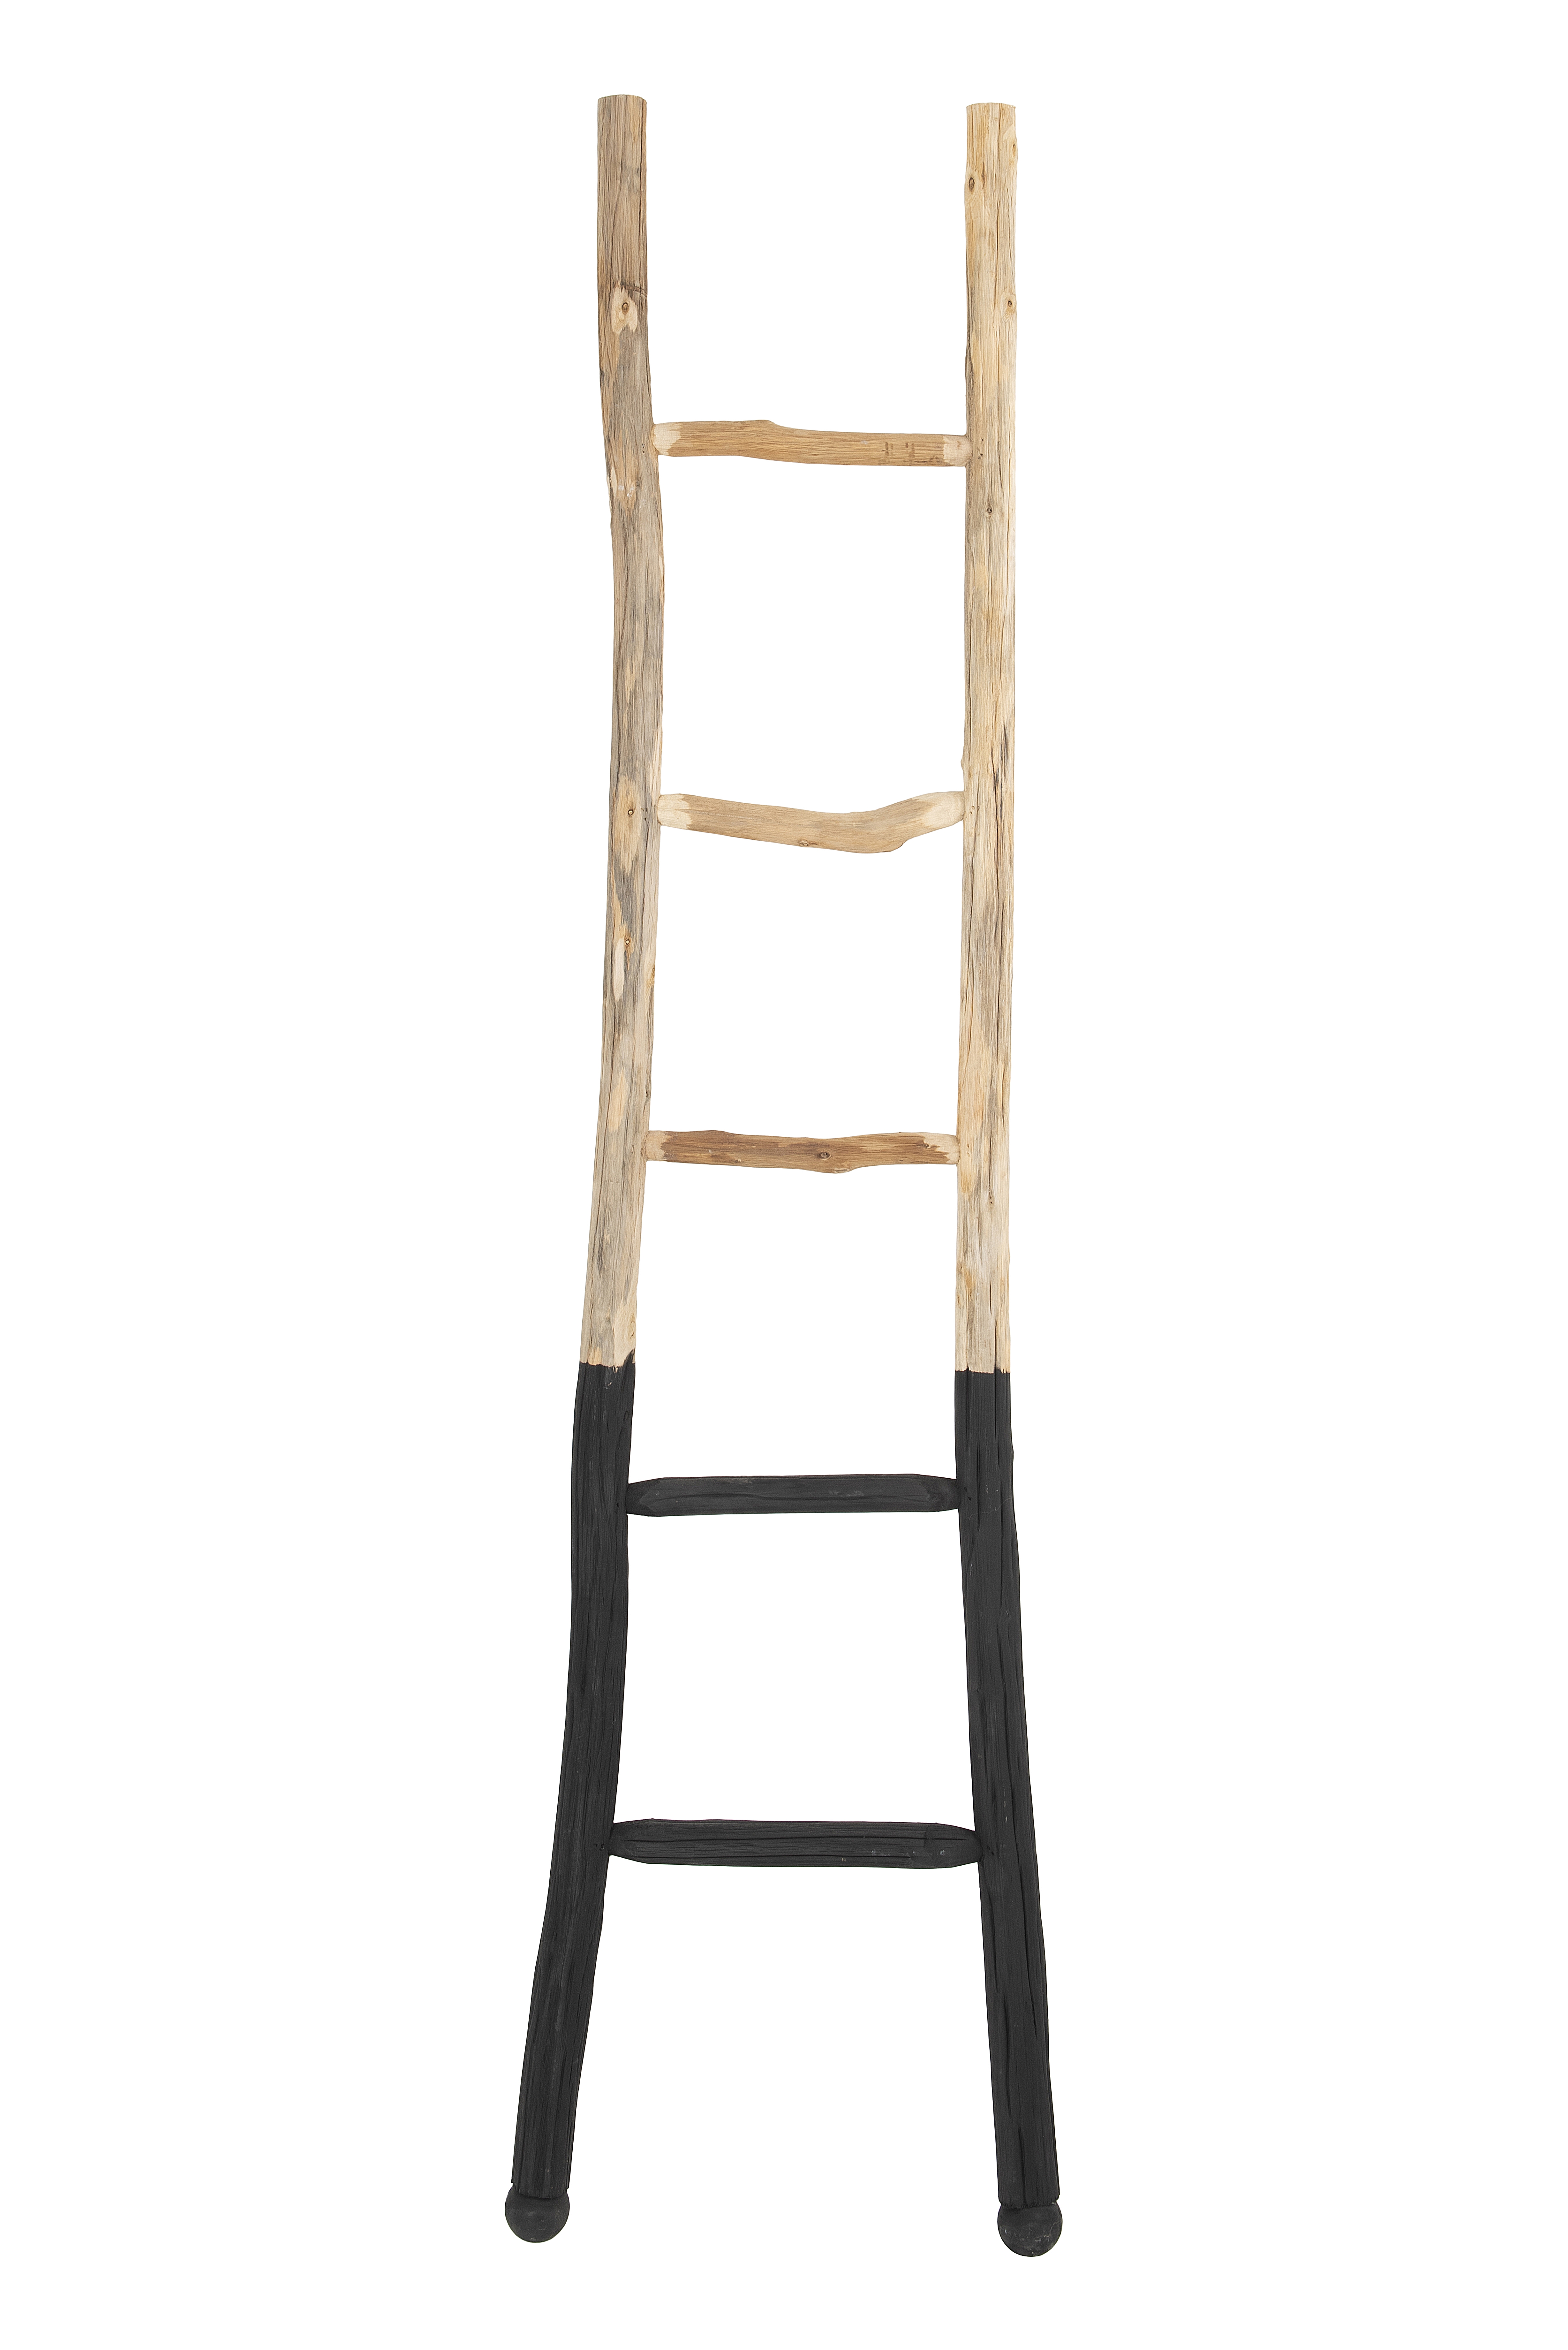 Decorative Wood Ladder - Image 1